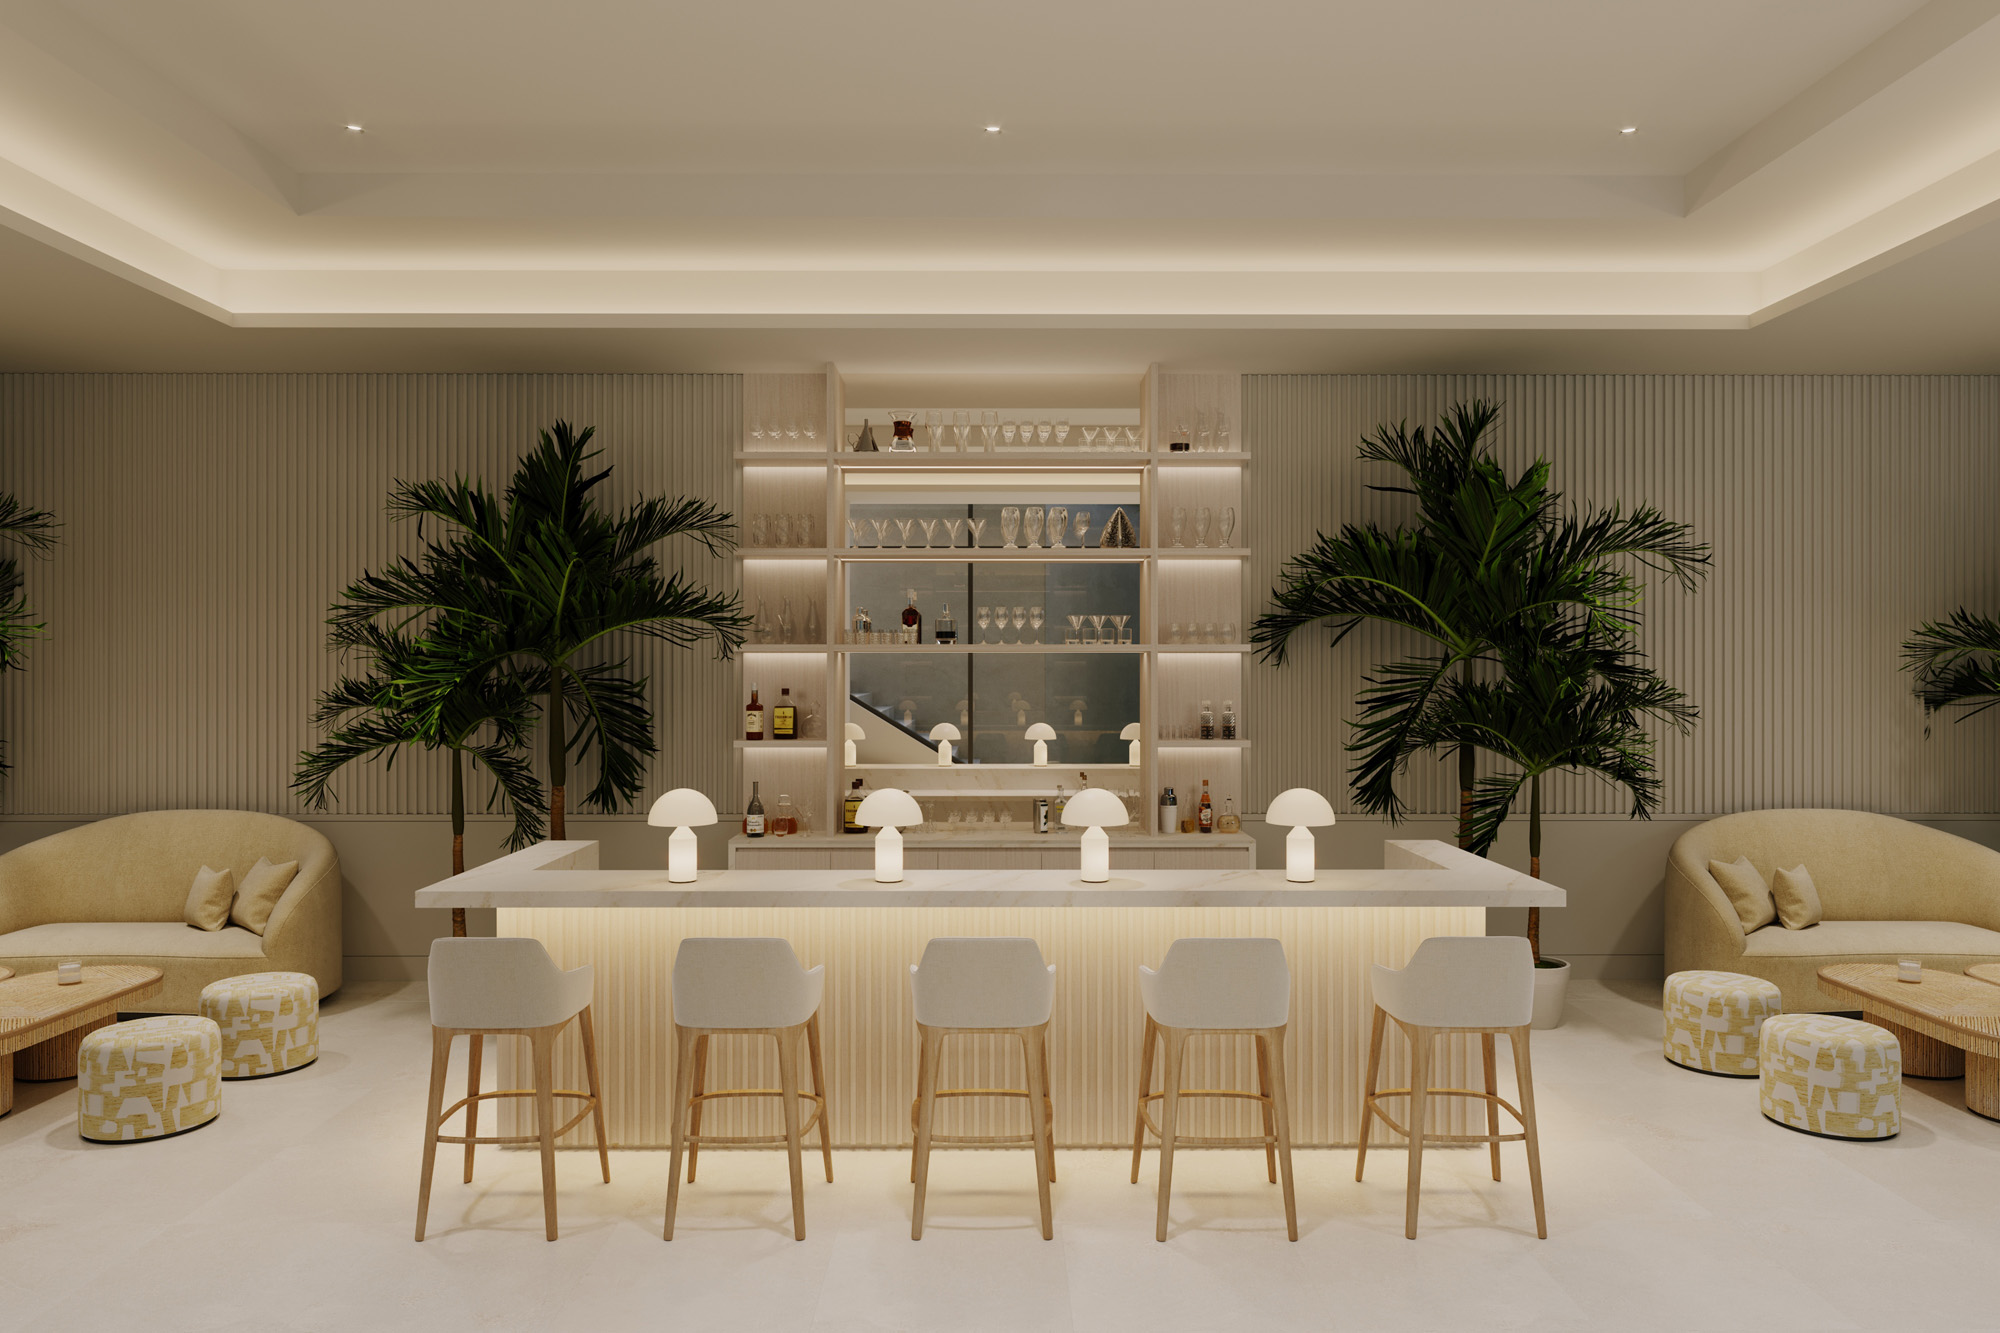 Luxury interior design by Alix Lawson